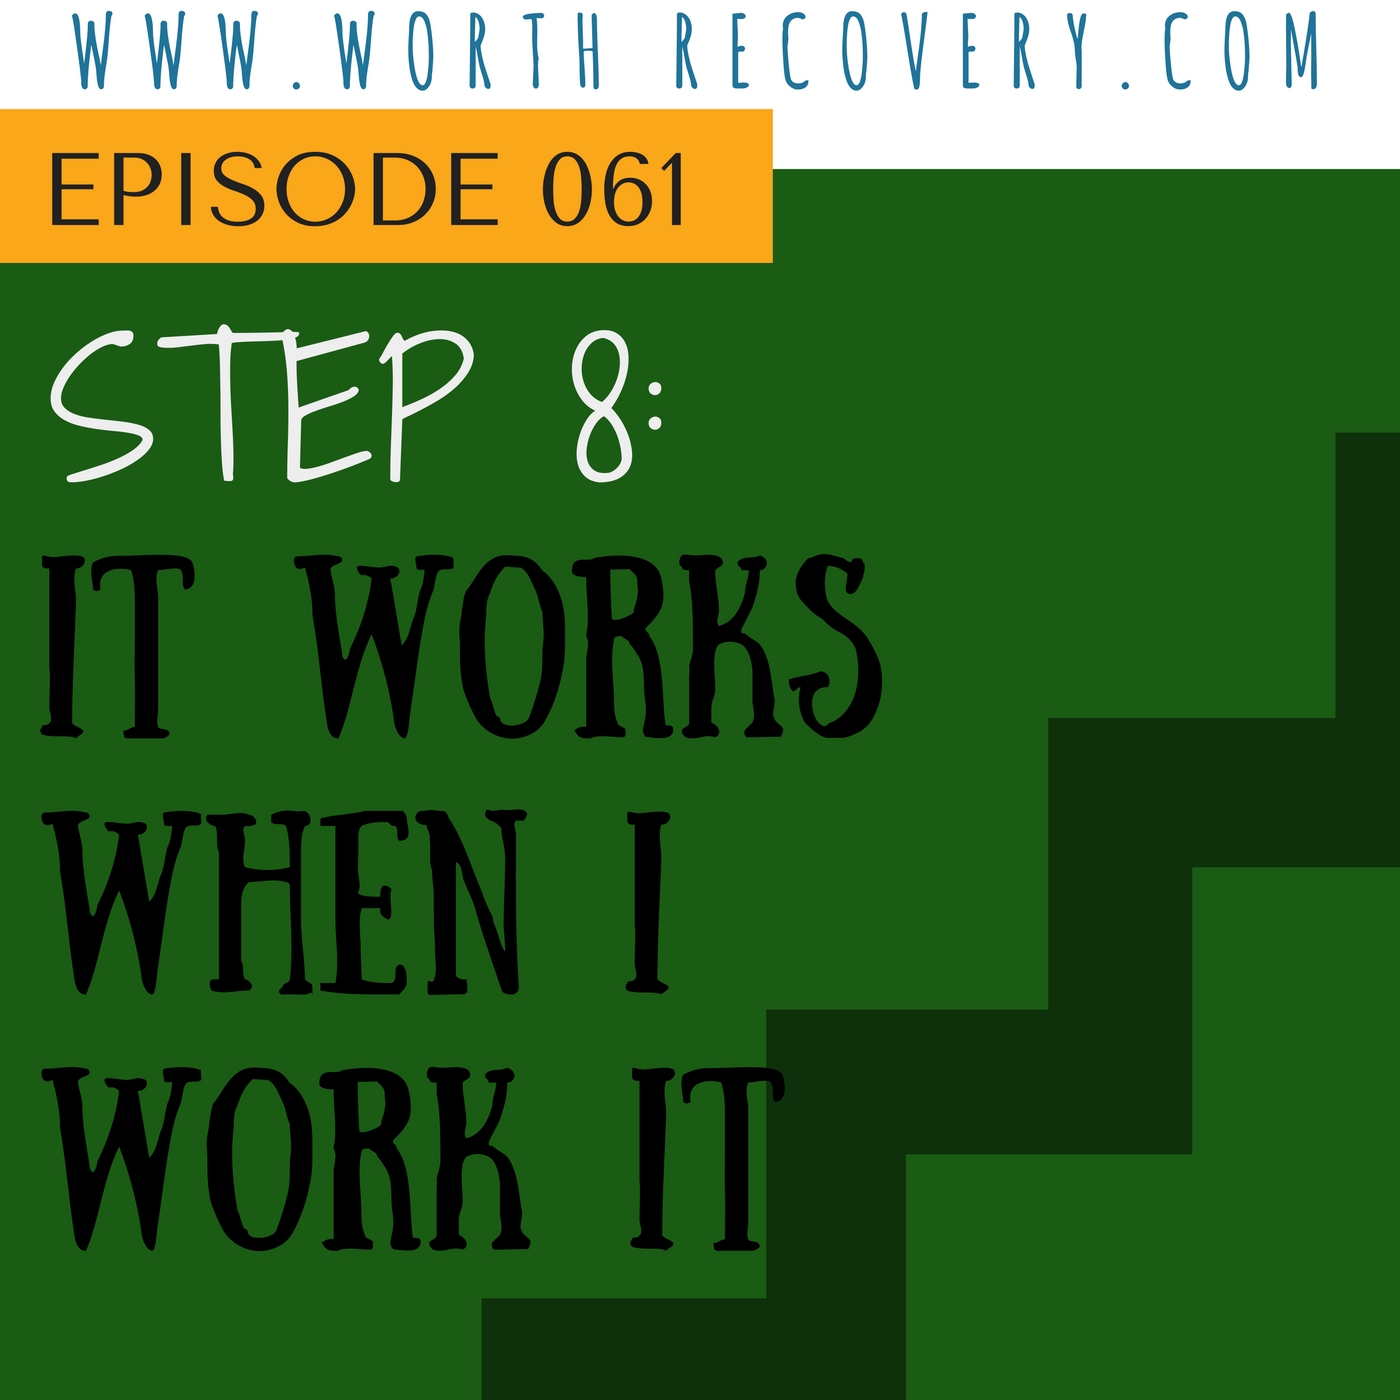 Episode 061: Step 8 - It Works When I Work It